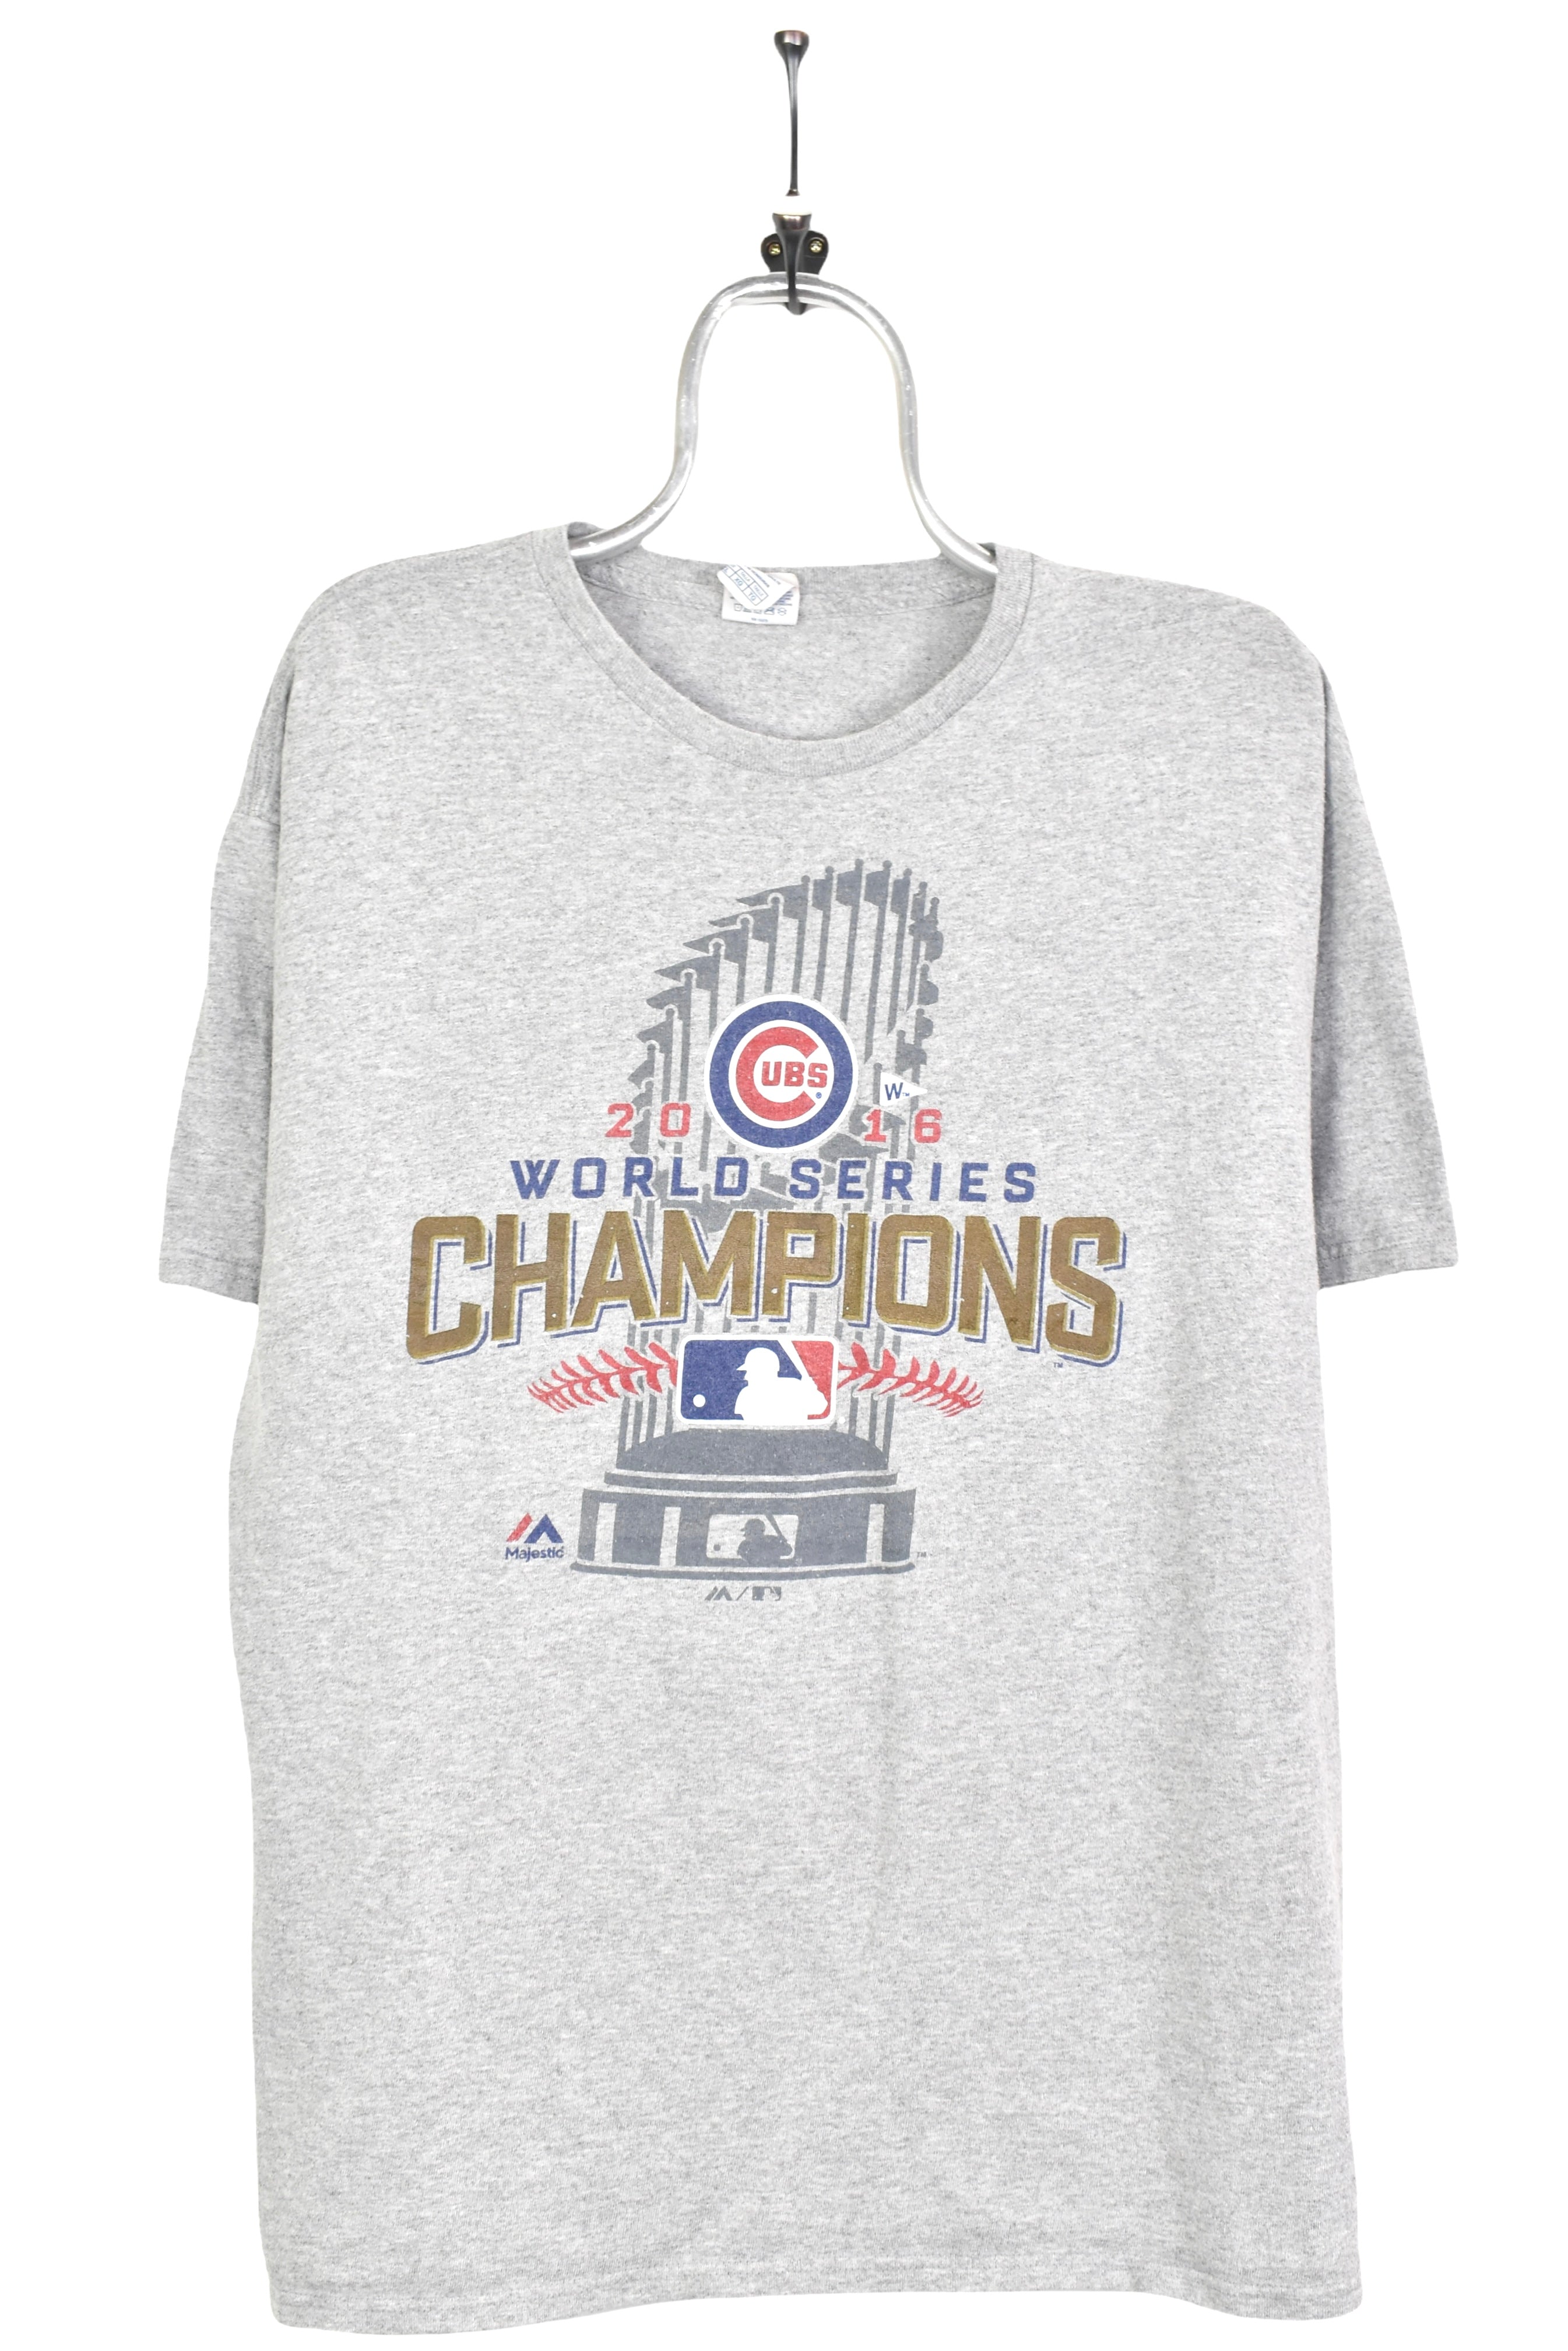 Modern Chicago Cubs shirt , MLB 2016 World Series graphic tee - AU L PRO SPORT